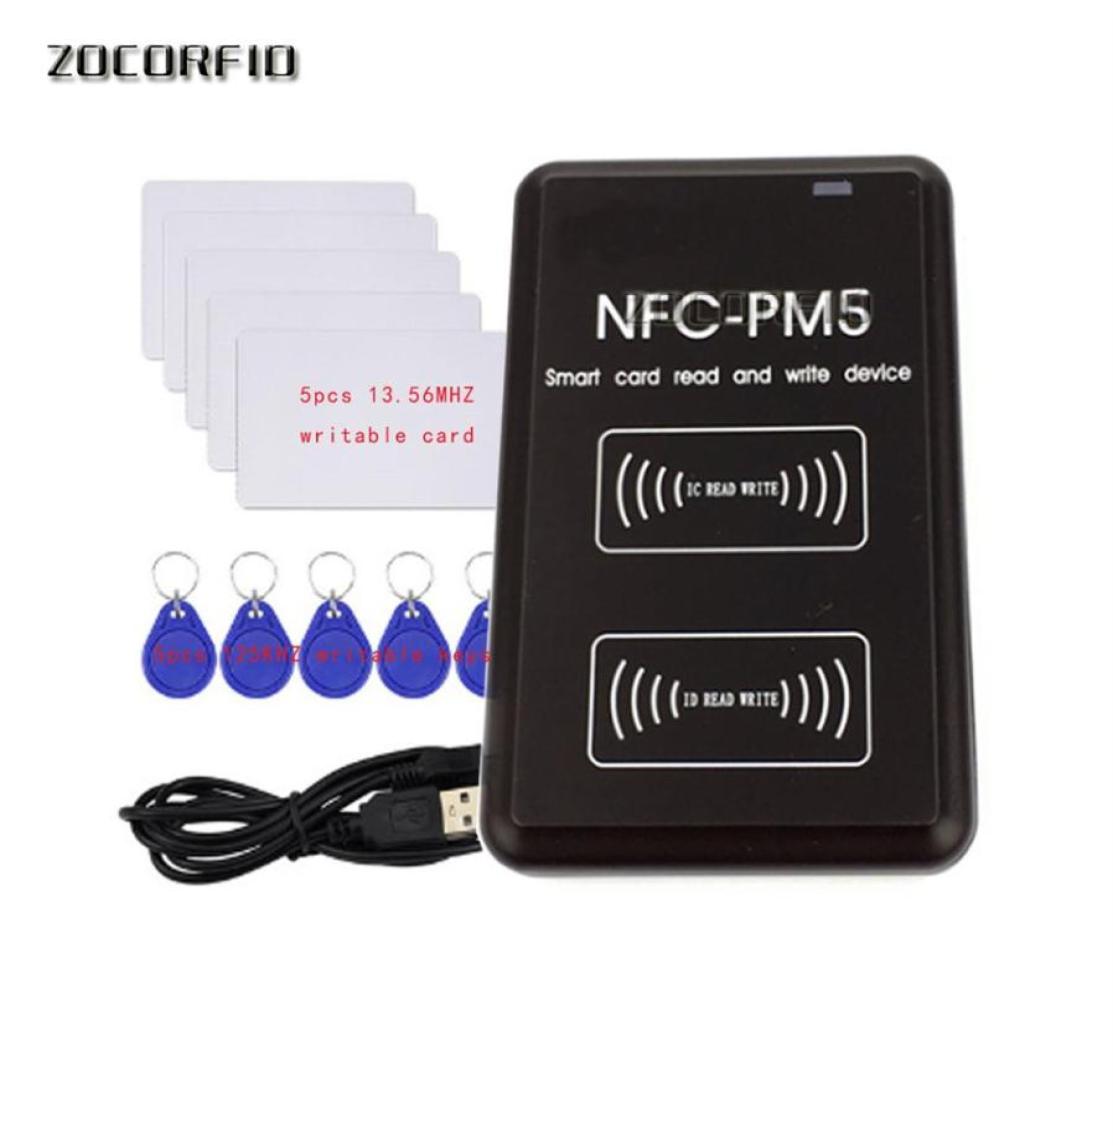 RFID NFC COPIER IC ID ID Conster Duplicator English الإصدار الأحدث مع وظيفة فك التشفير الكاملة بطاقة SMART KEY306H441897